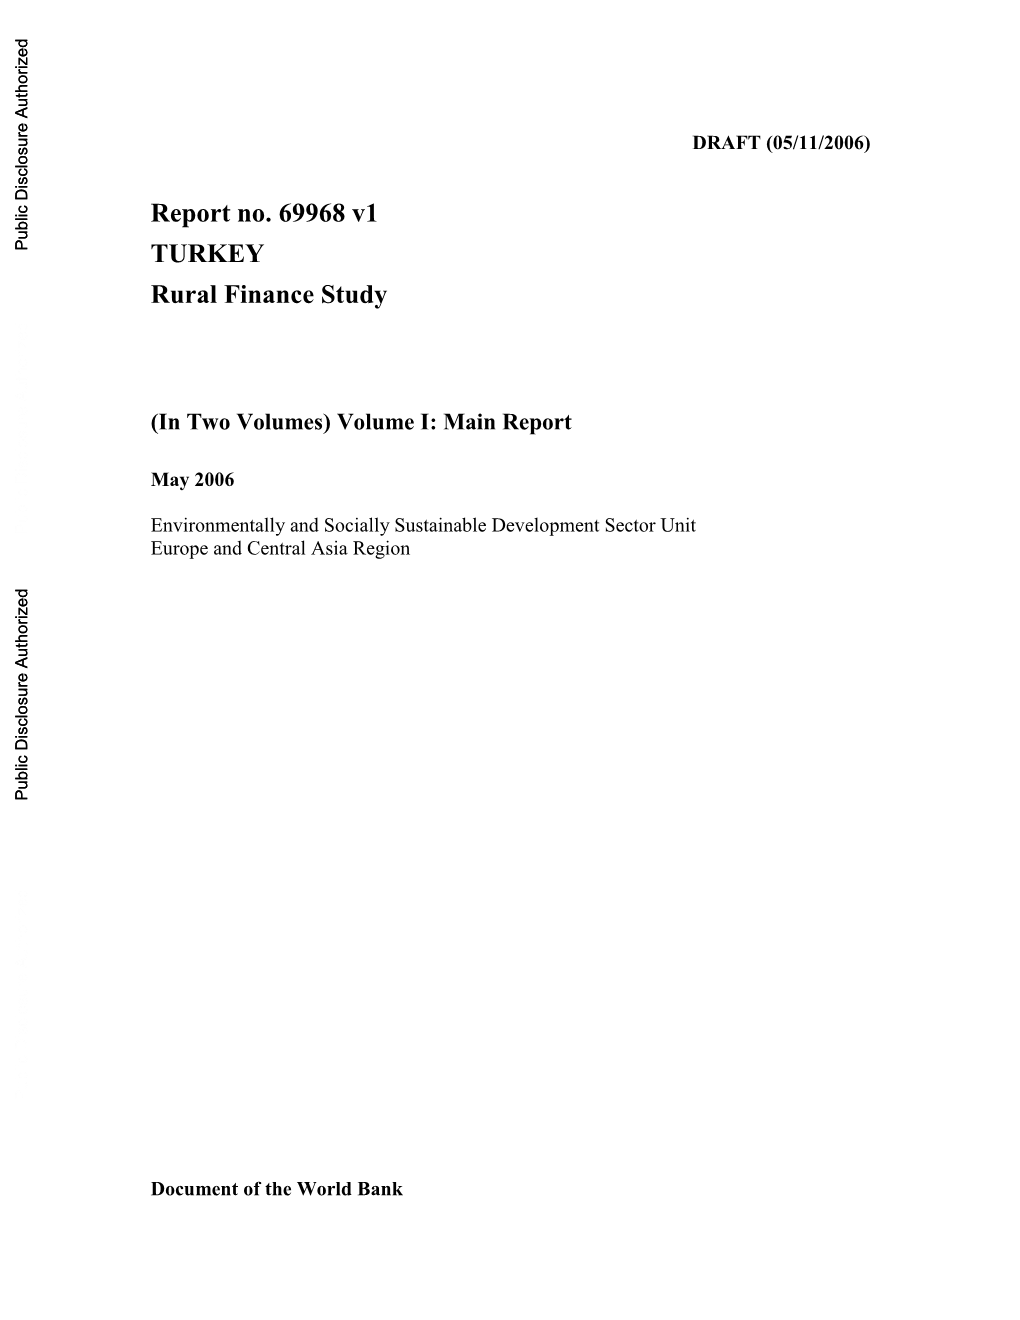 Report No. 69968 V1 TURKEY Rural Finance